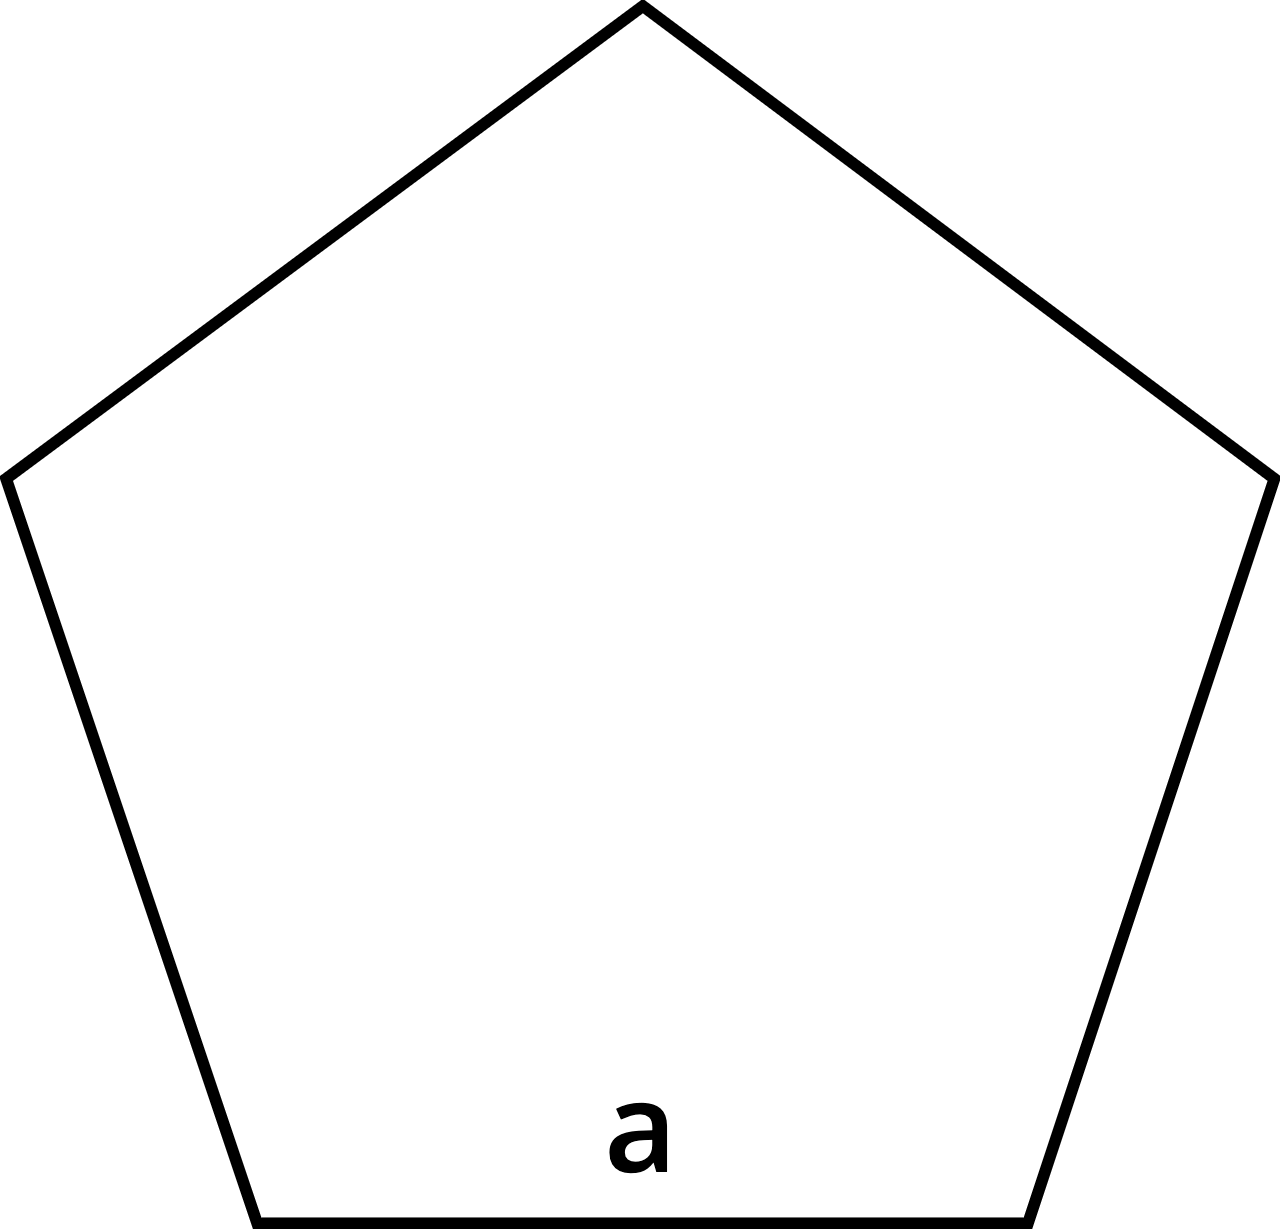 Diagram of a pentagon showing a = edge length